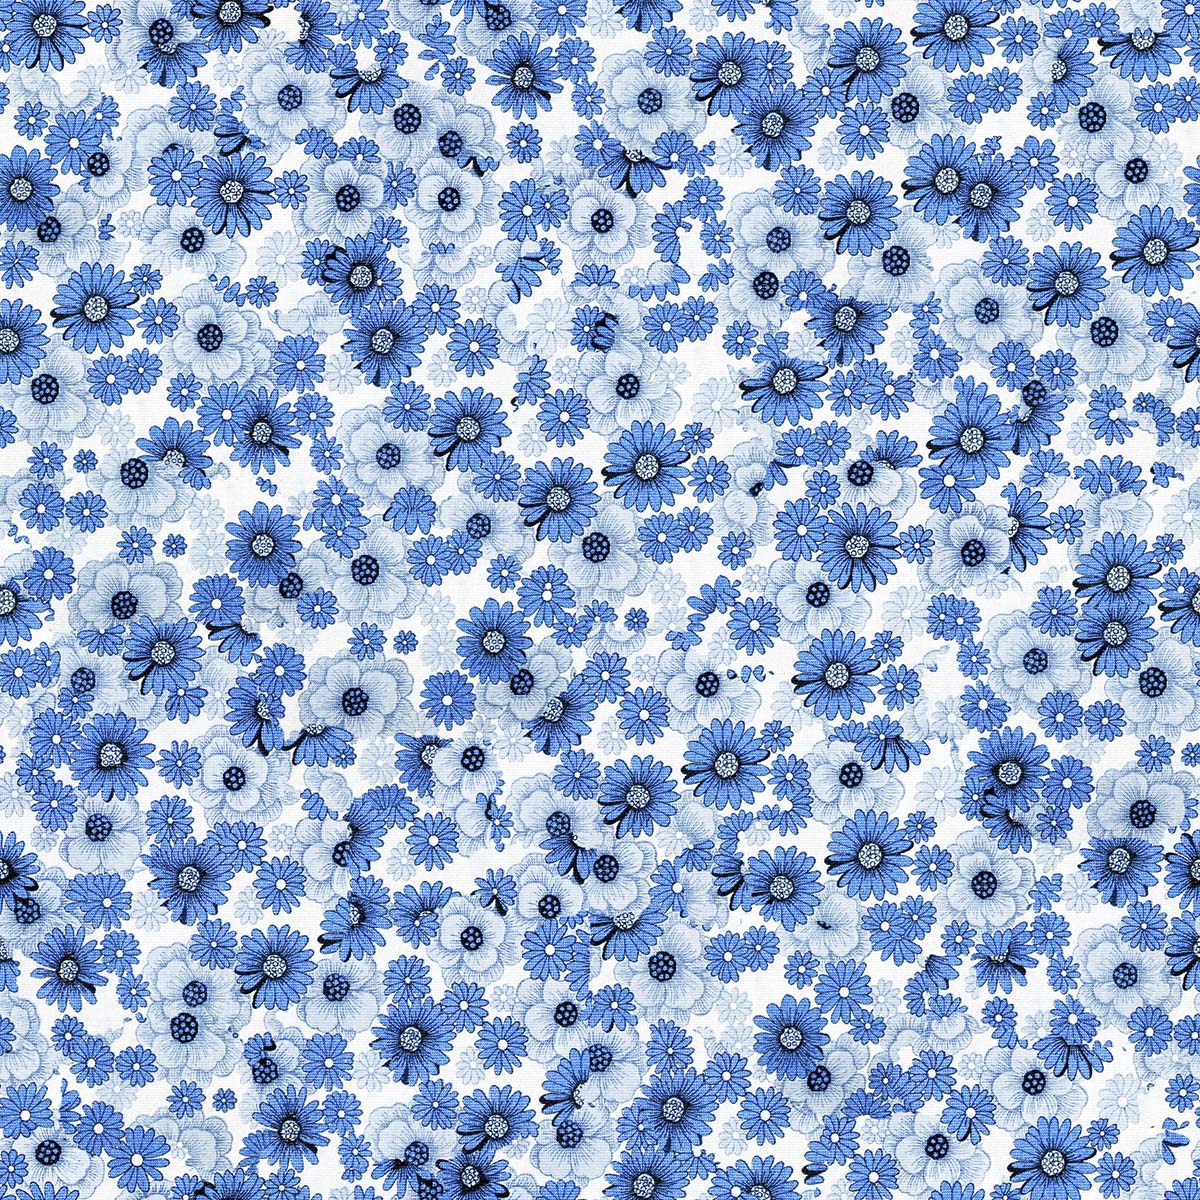 A pattern of blue flowers